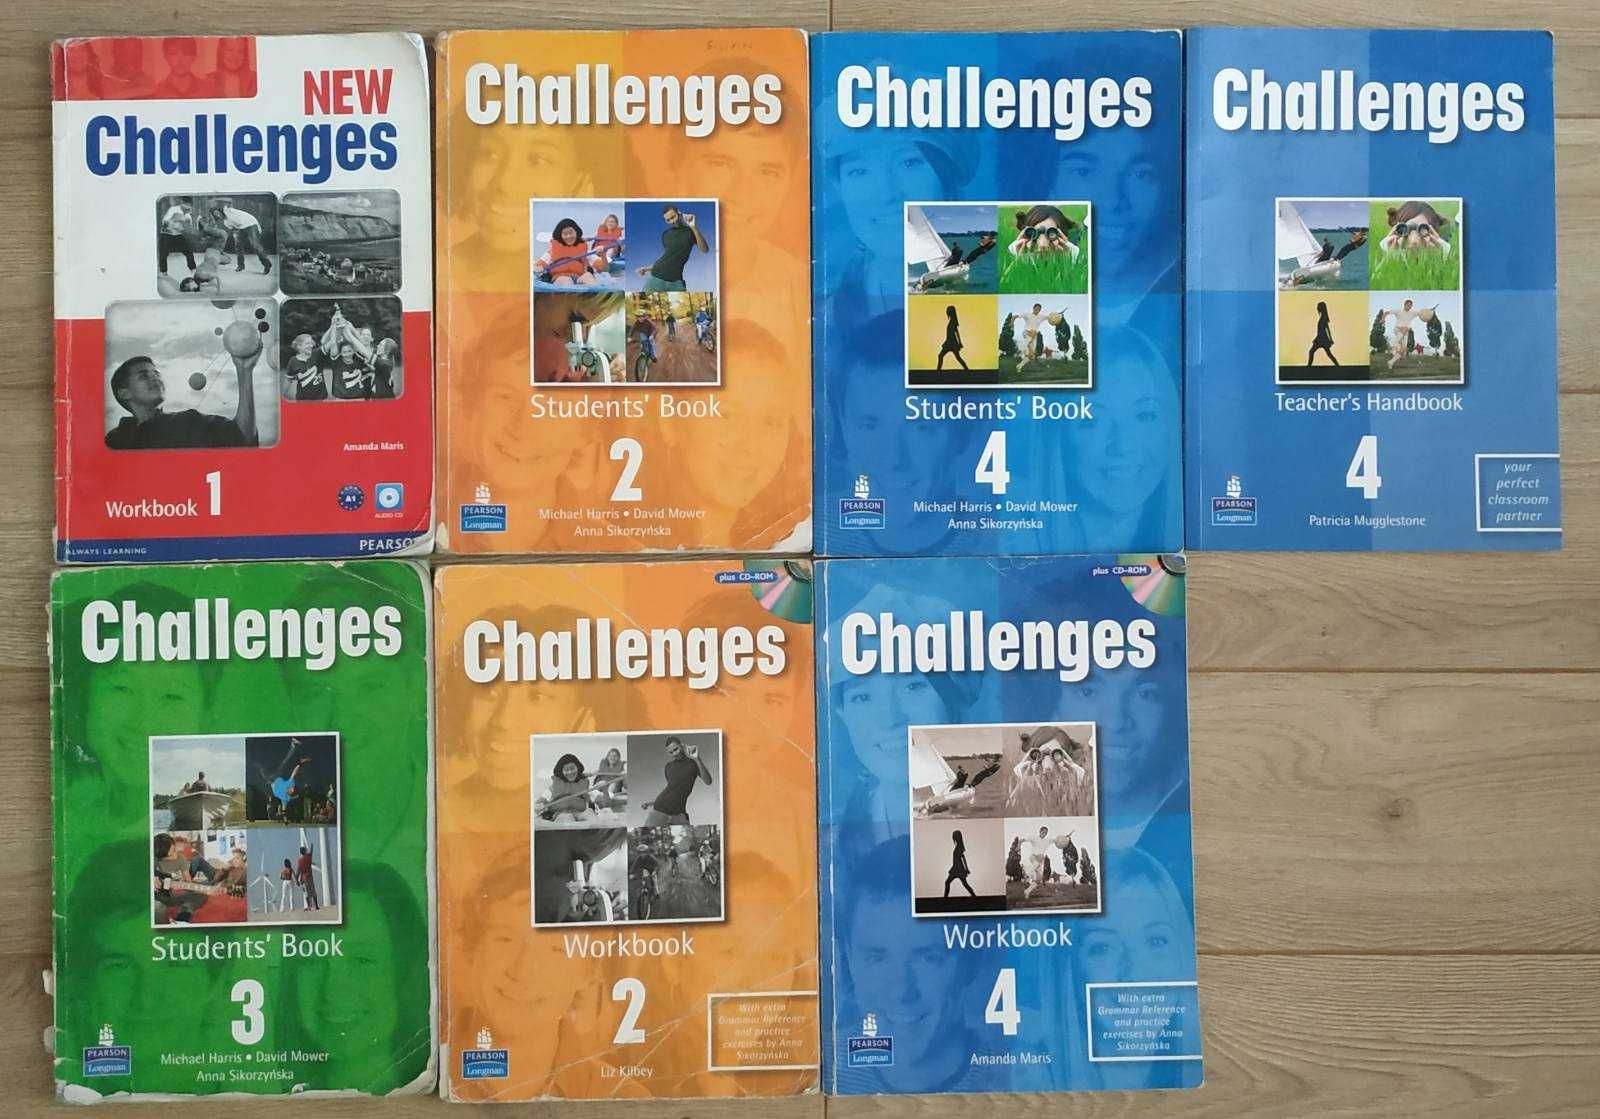 New Challenges, Challenges 1, 2, 3, 4